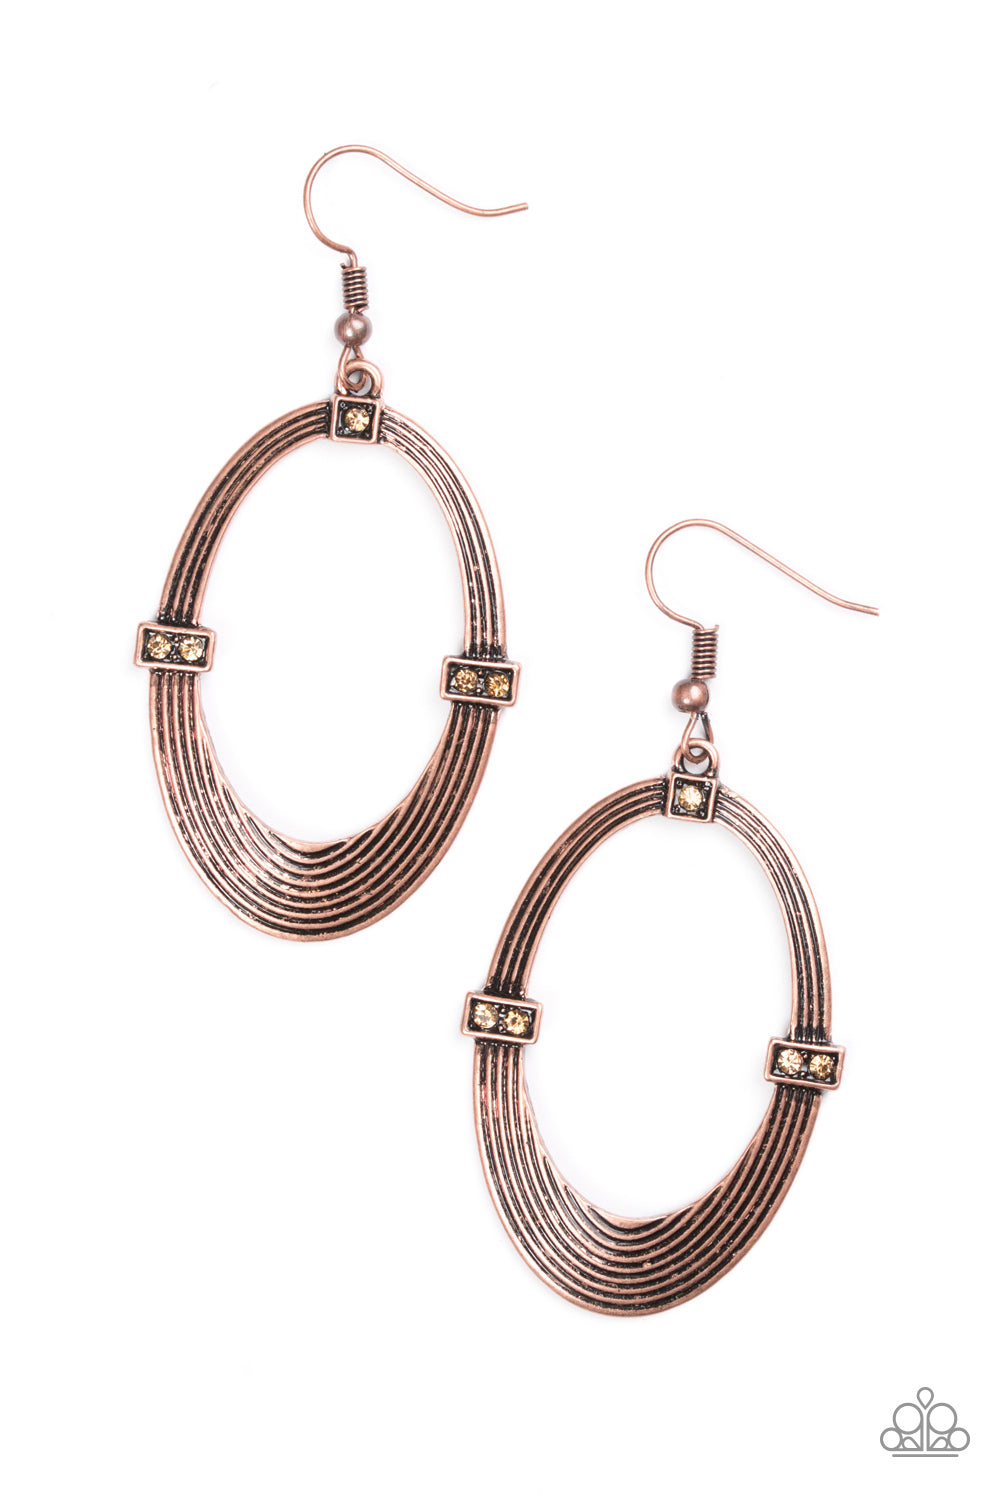 Radiantly Rural - Copper Earrings